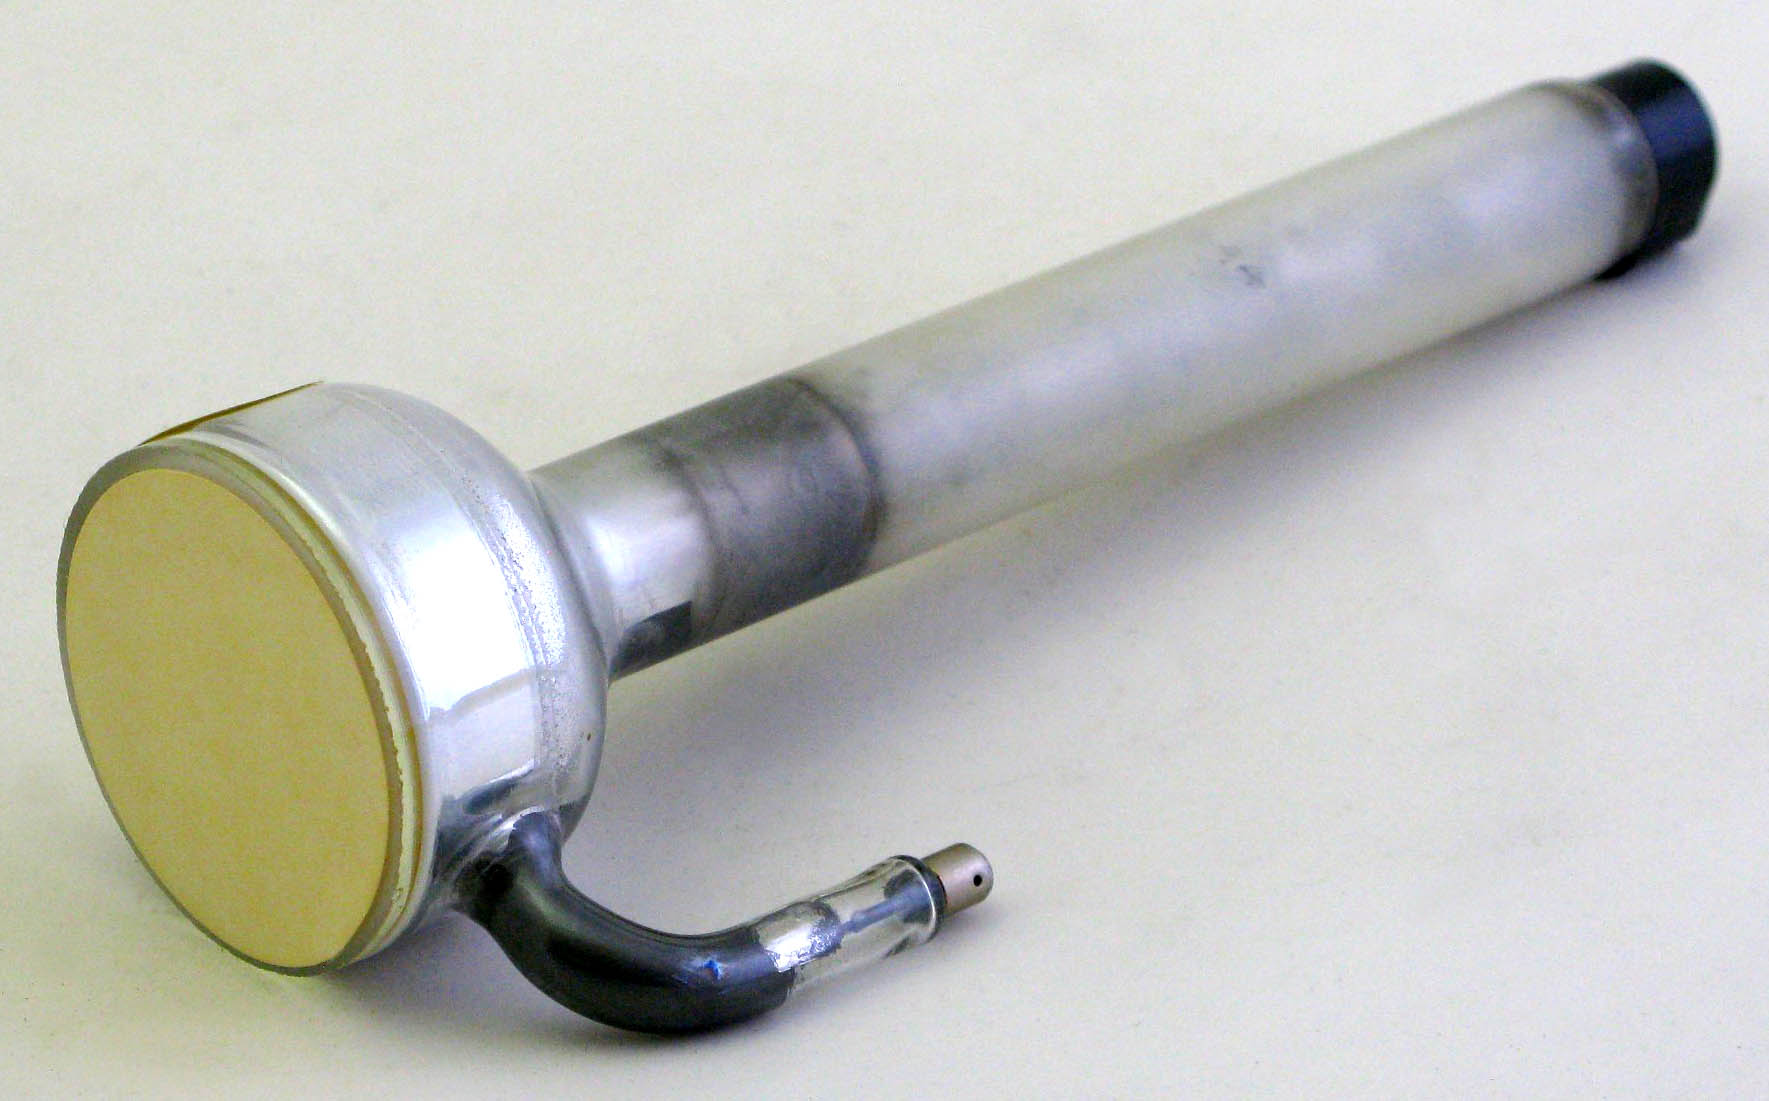 Buccaneer HUD Cathode Ray Tube (CRT)